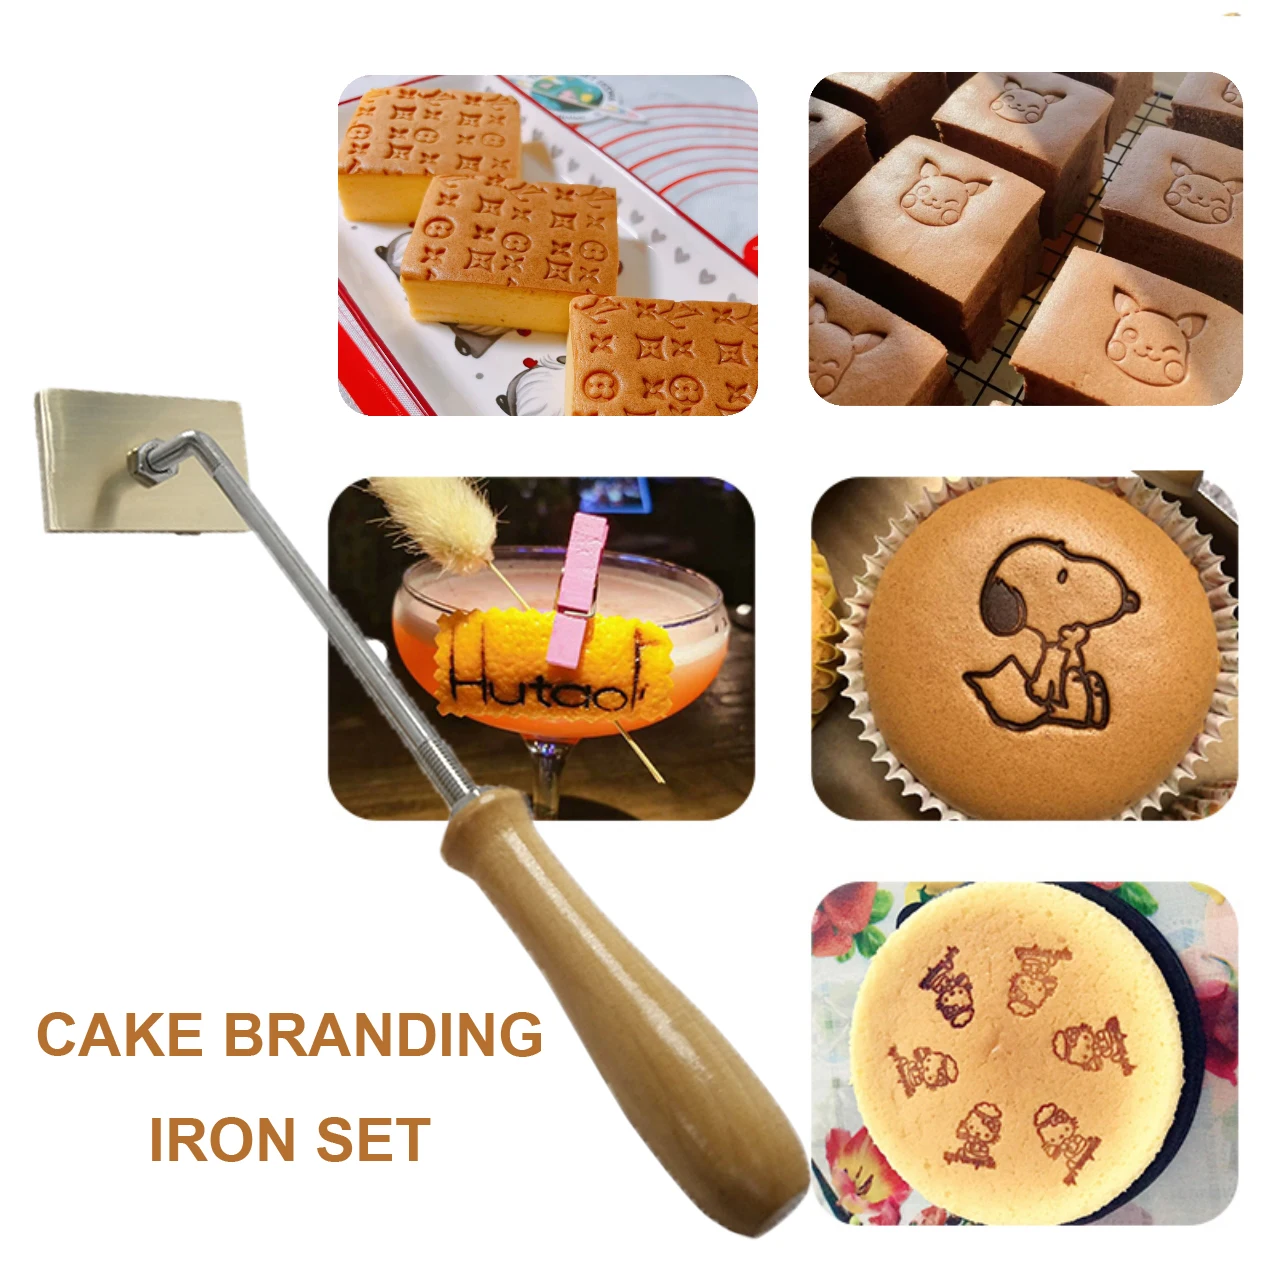 Cake Branding Iron Brass Stamp DIY Hot Stamping 3CM Cartoon LOGO Burger Pie Leather Wood Printing Tool Flame Heating Mold Handle